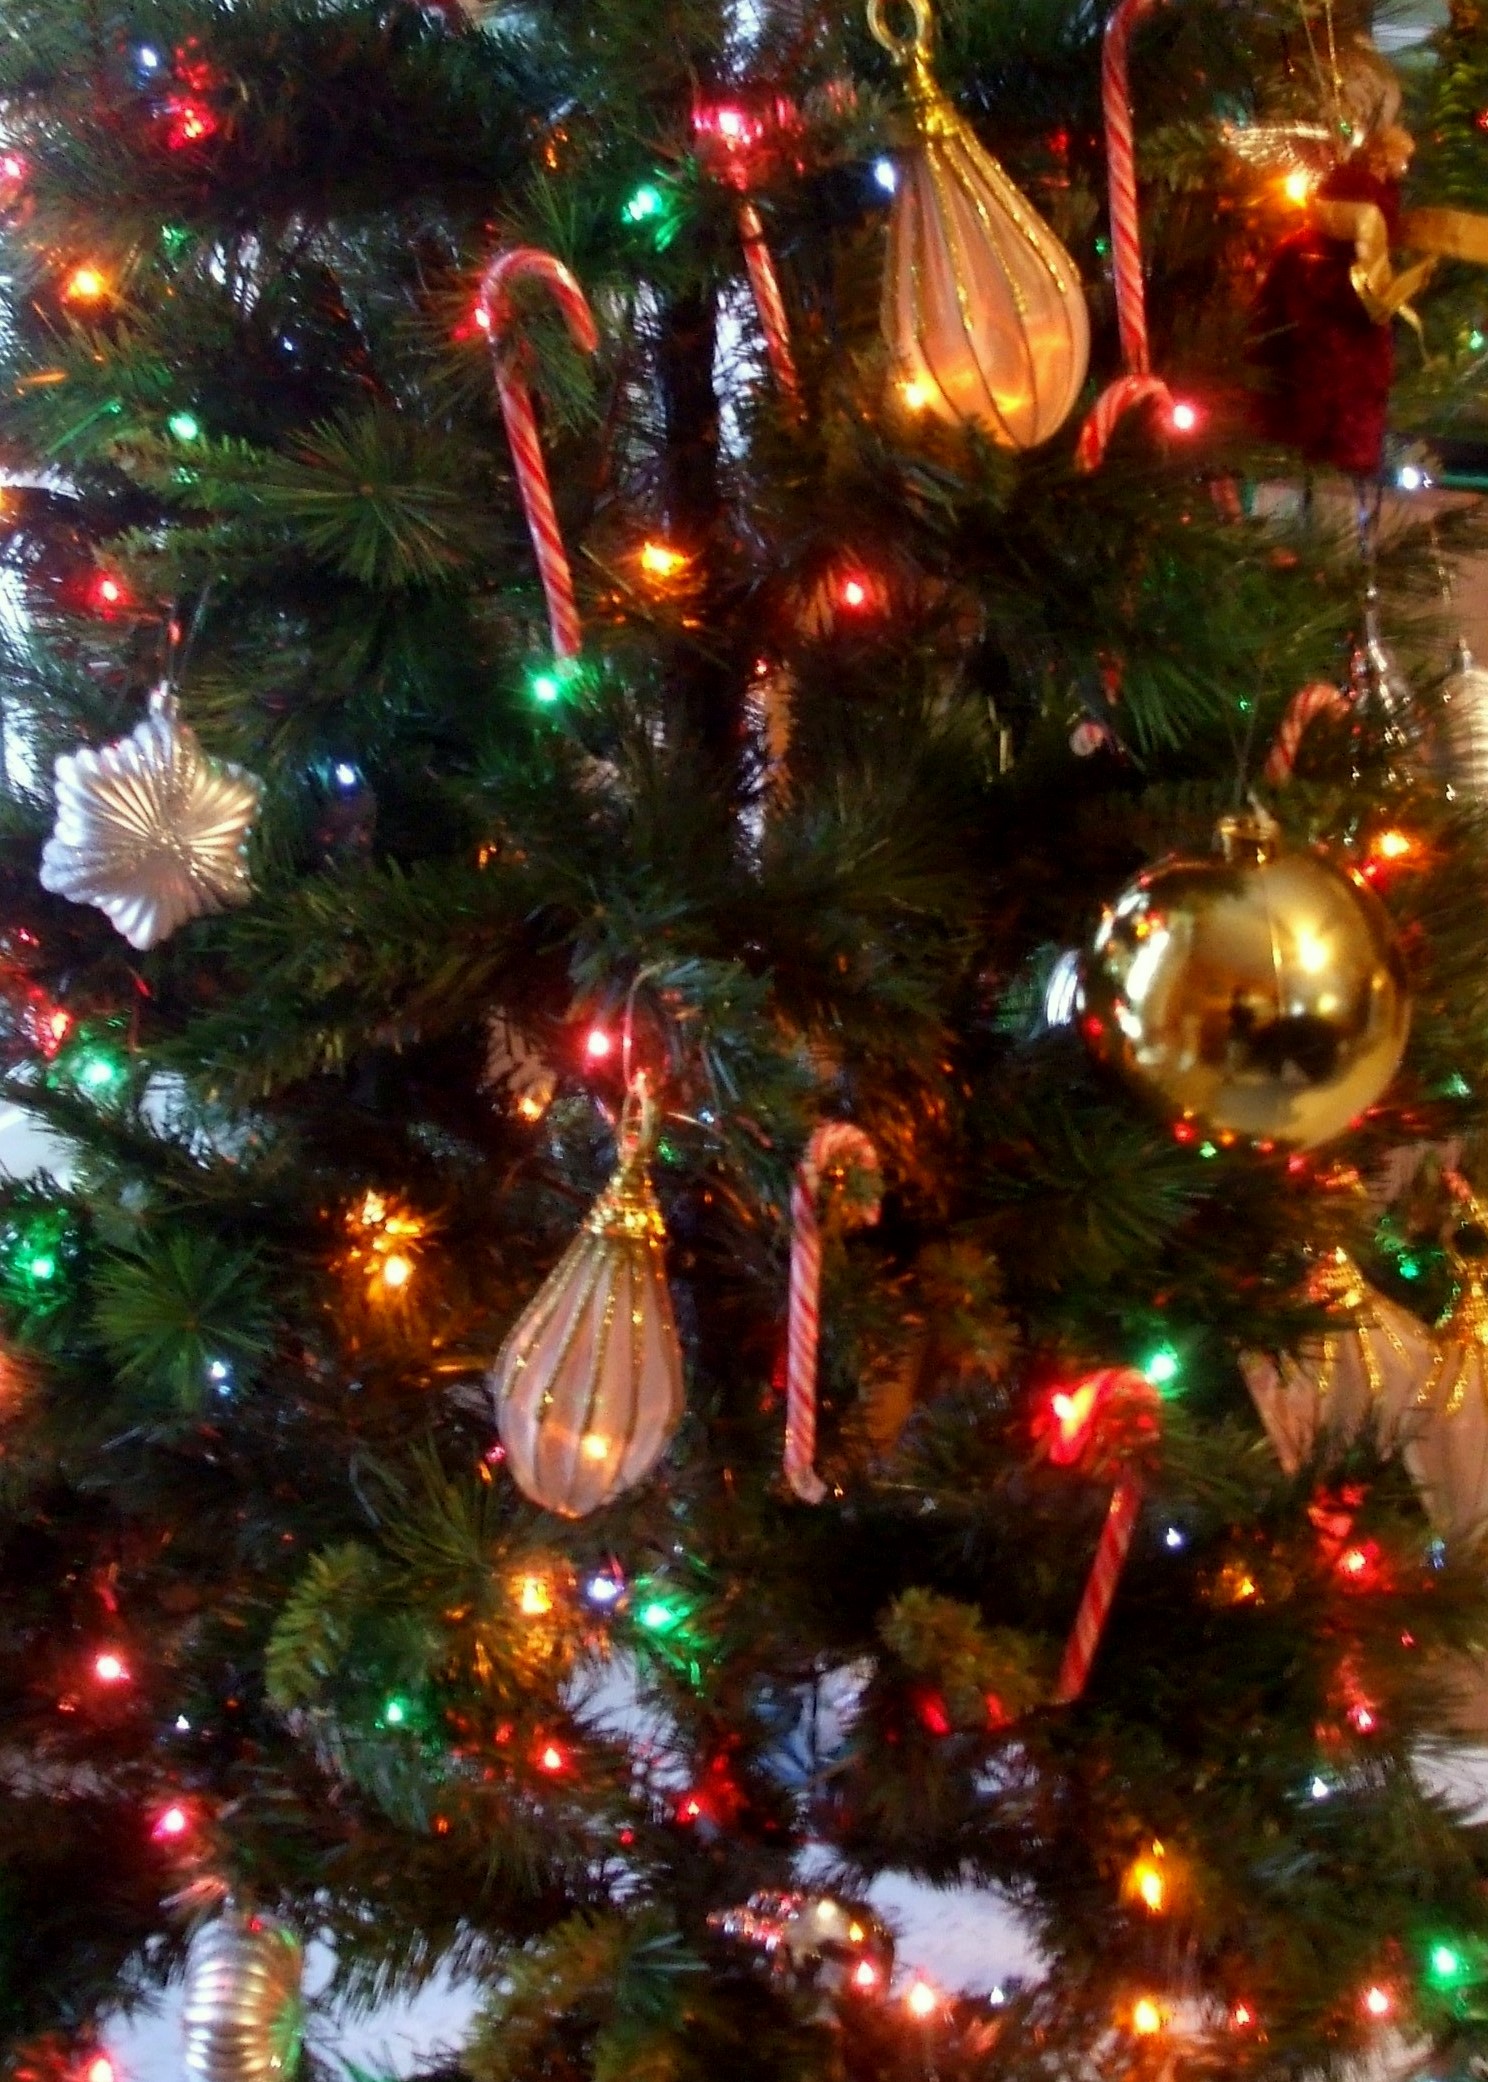 christmasphotos9076.jpg - decorations on tree